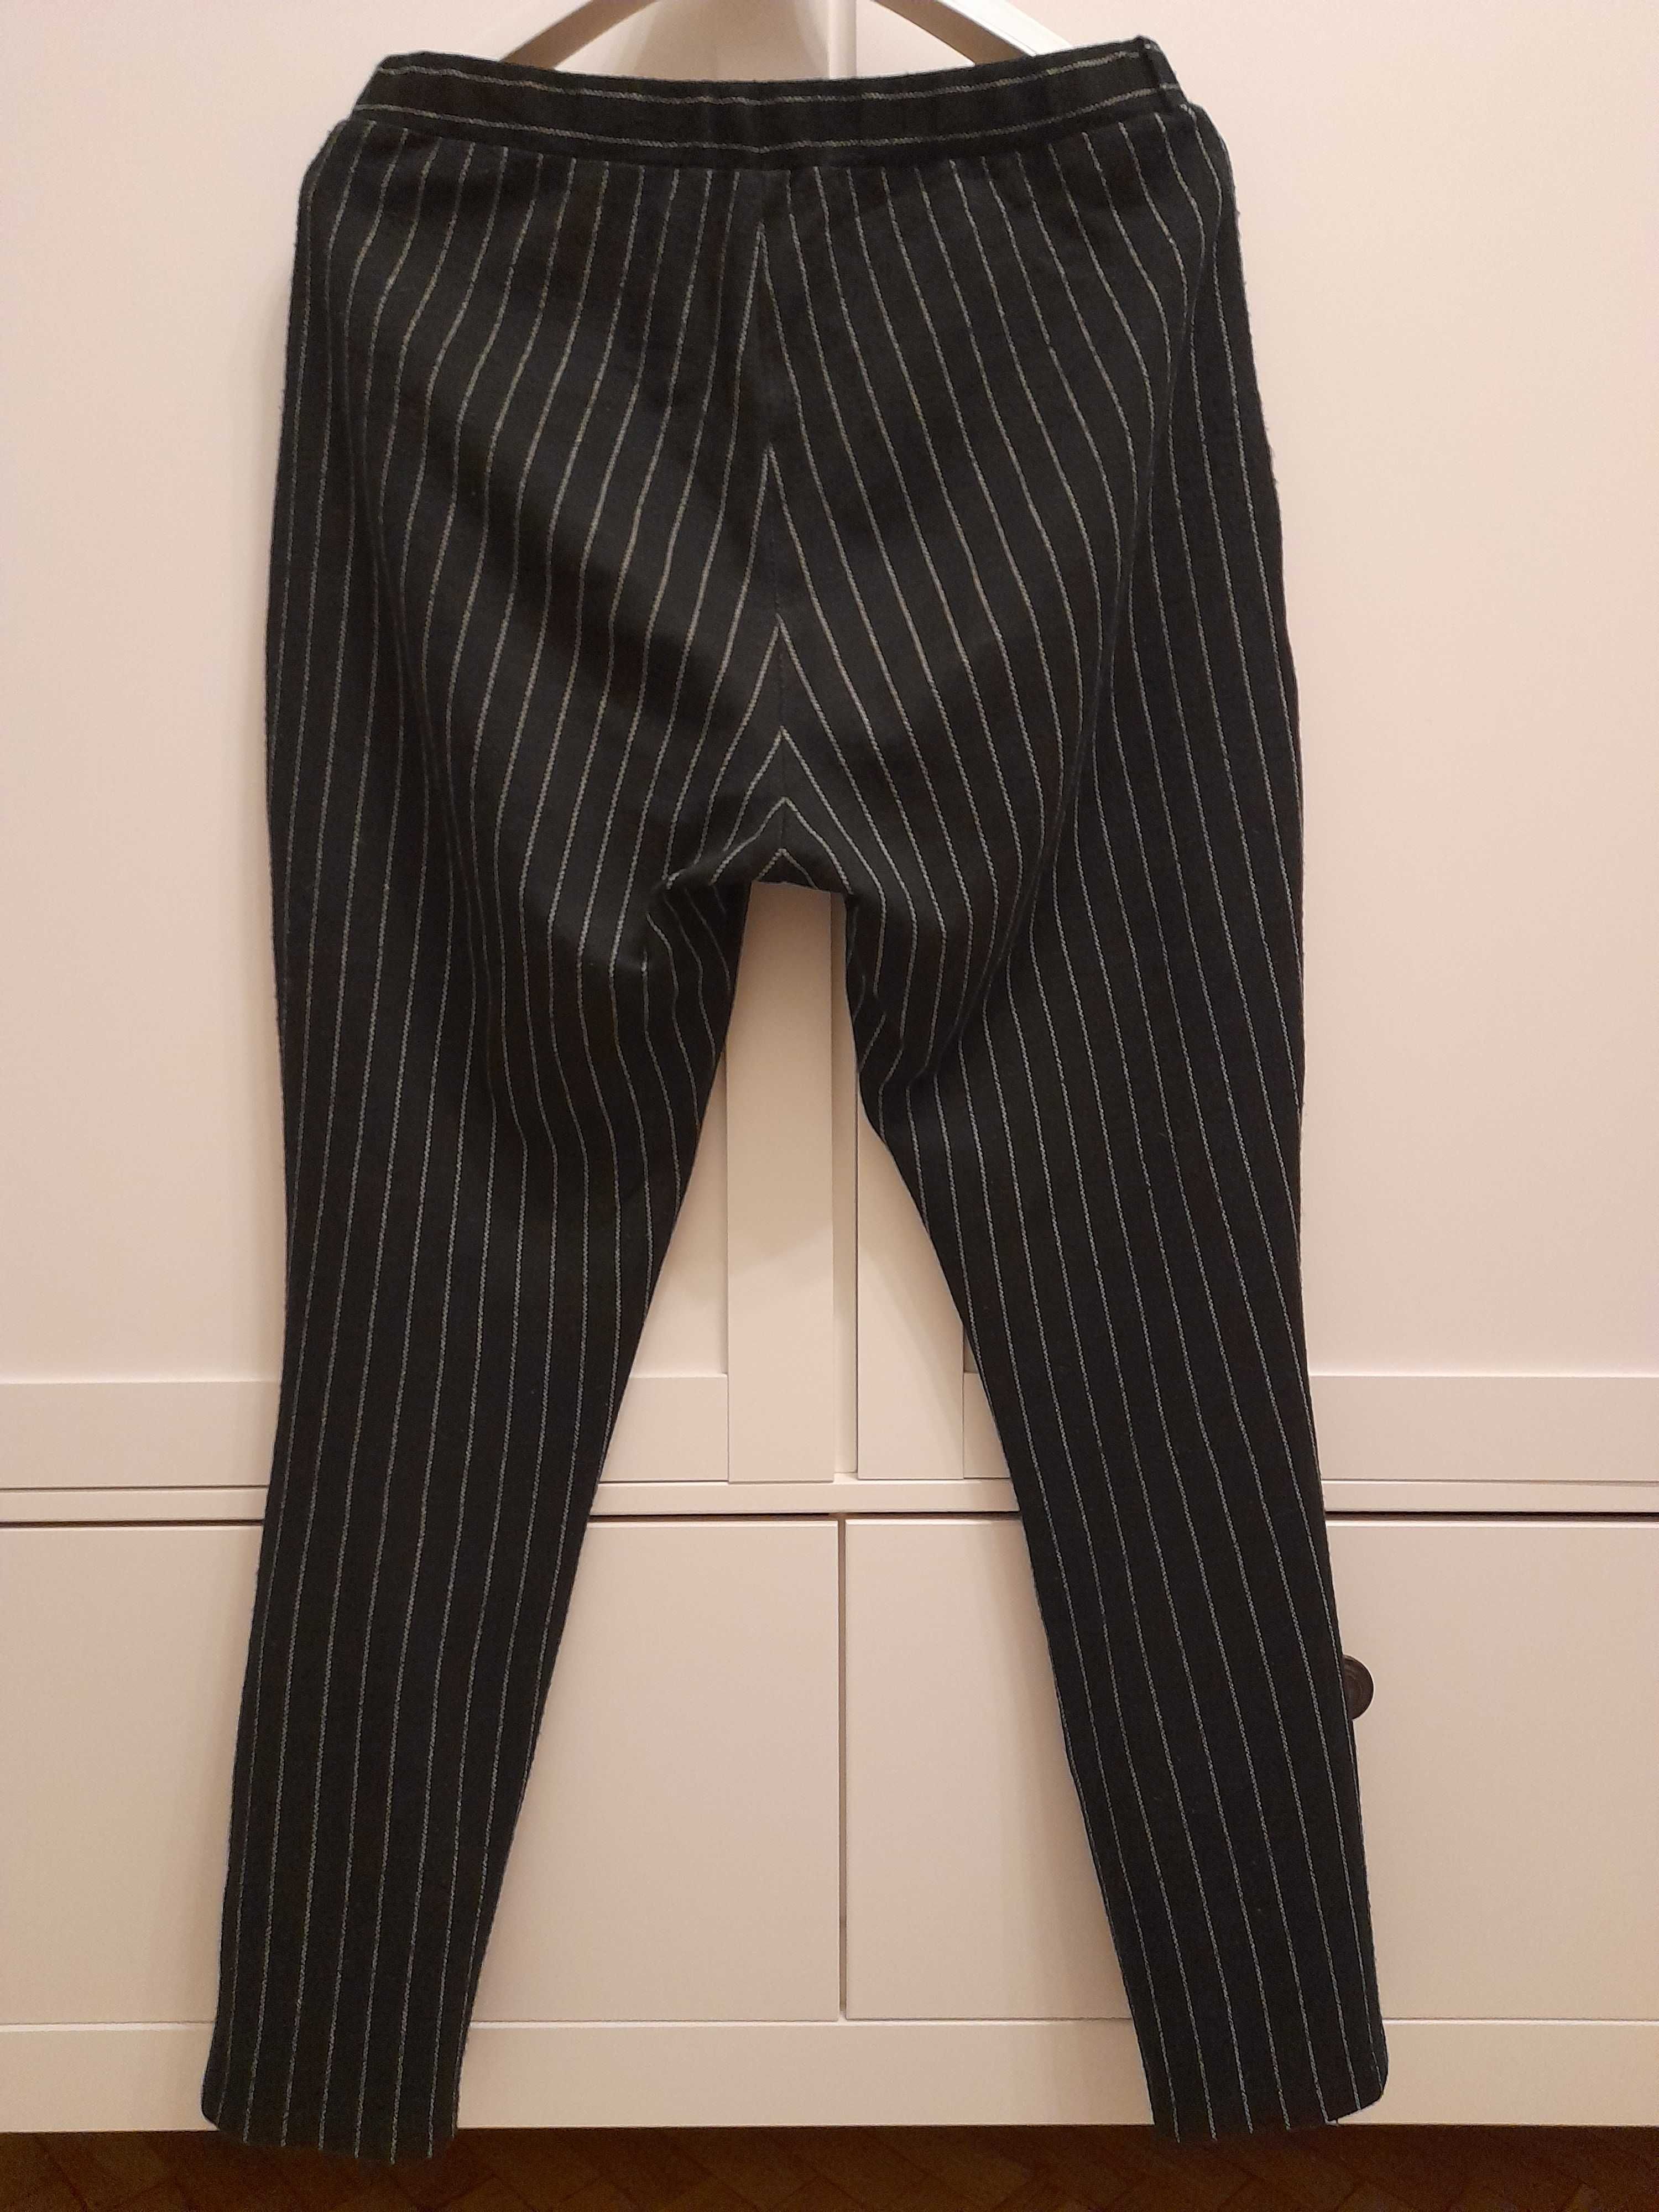 Pantalon Max&co, cu lana , nr.36-38, 50 lei